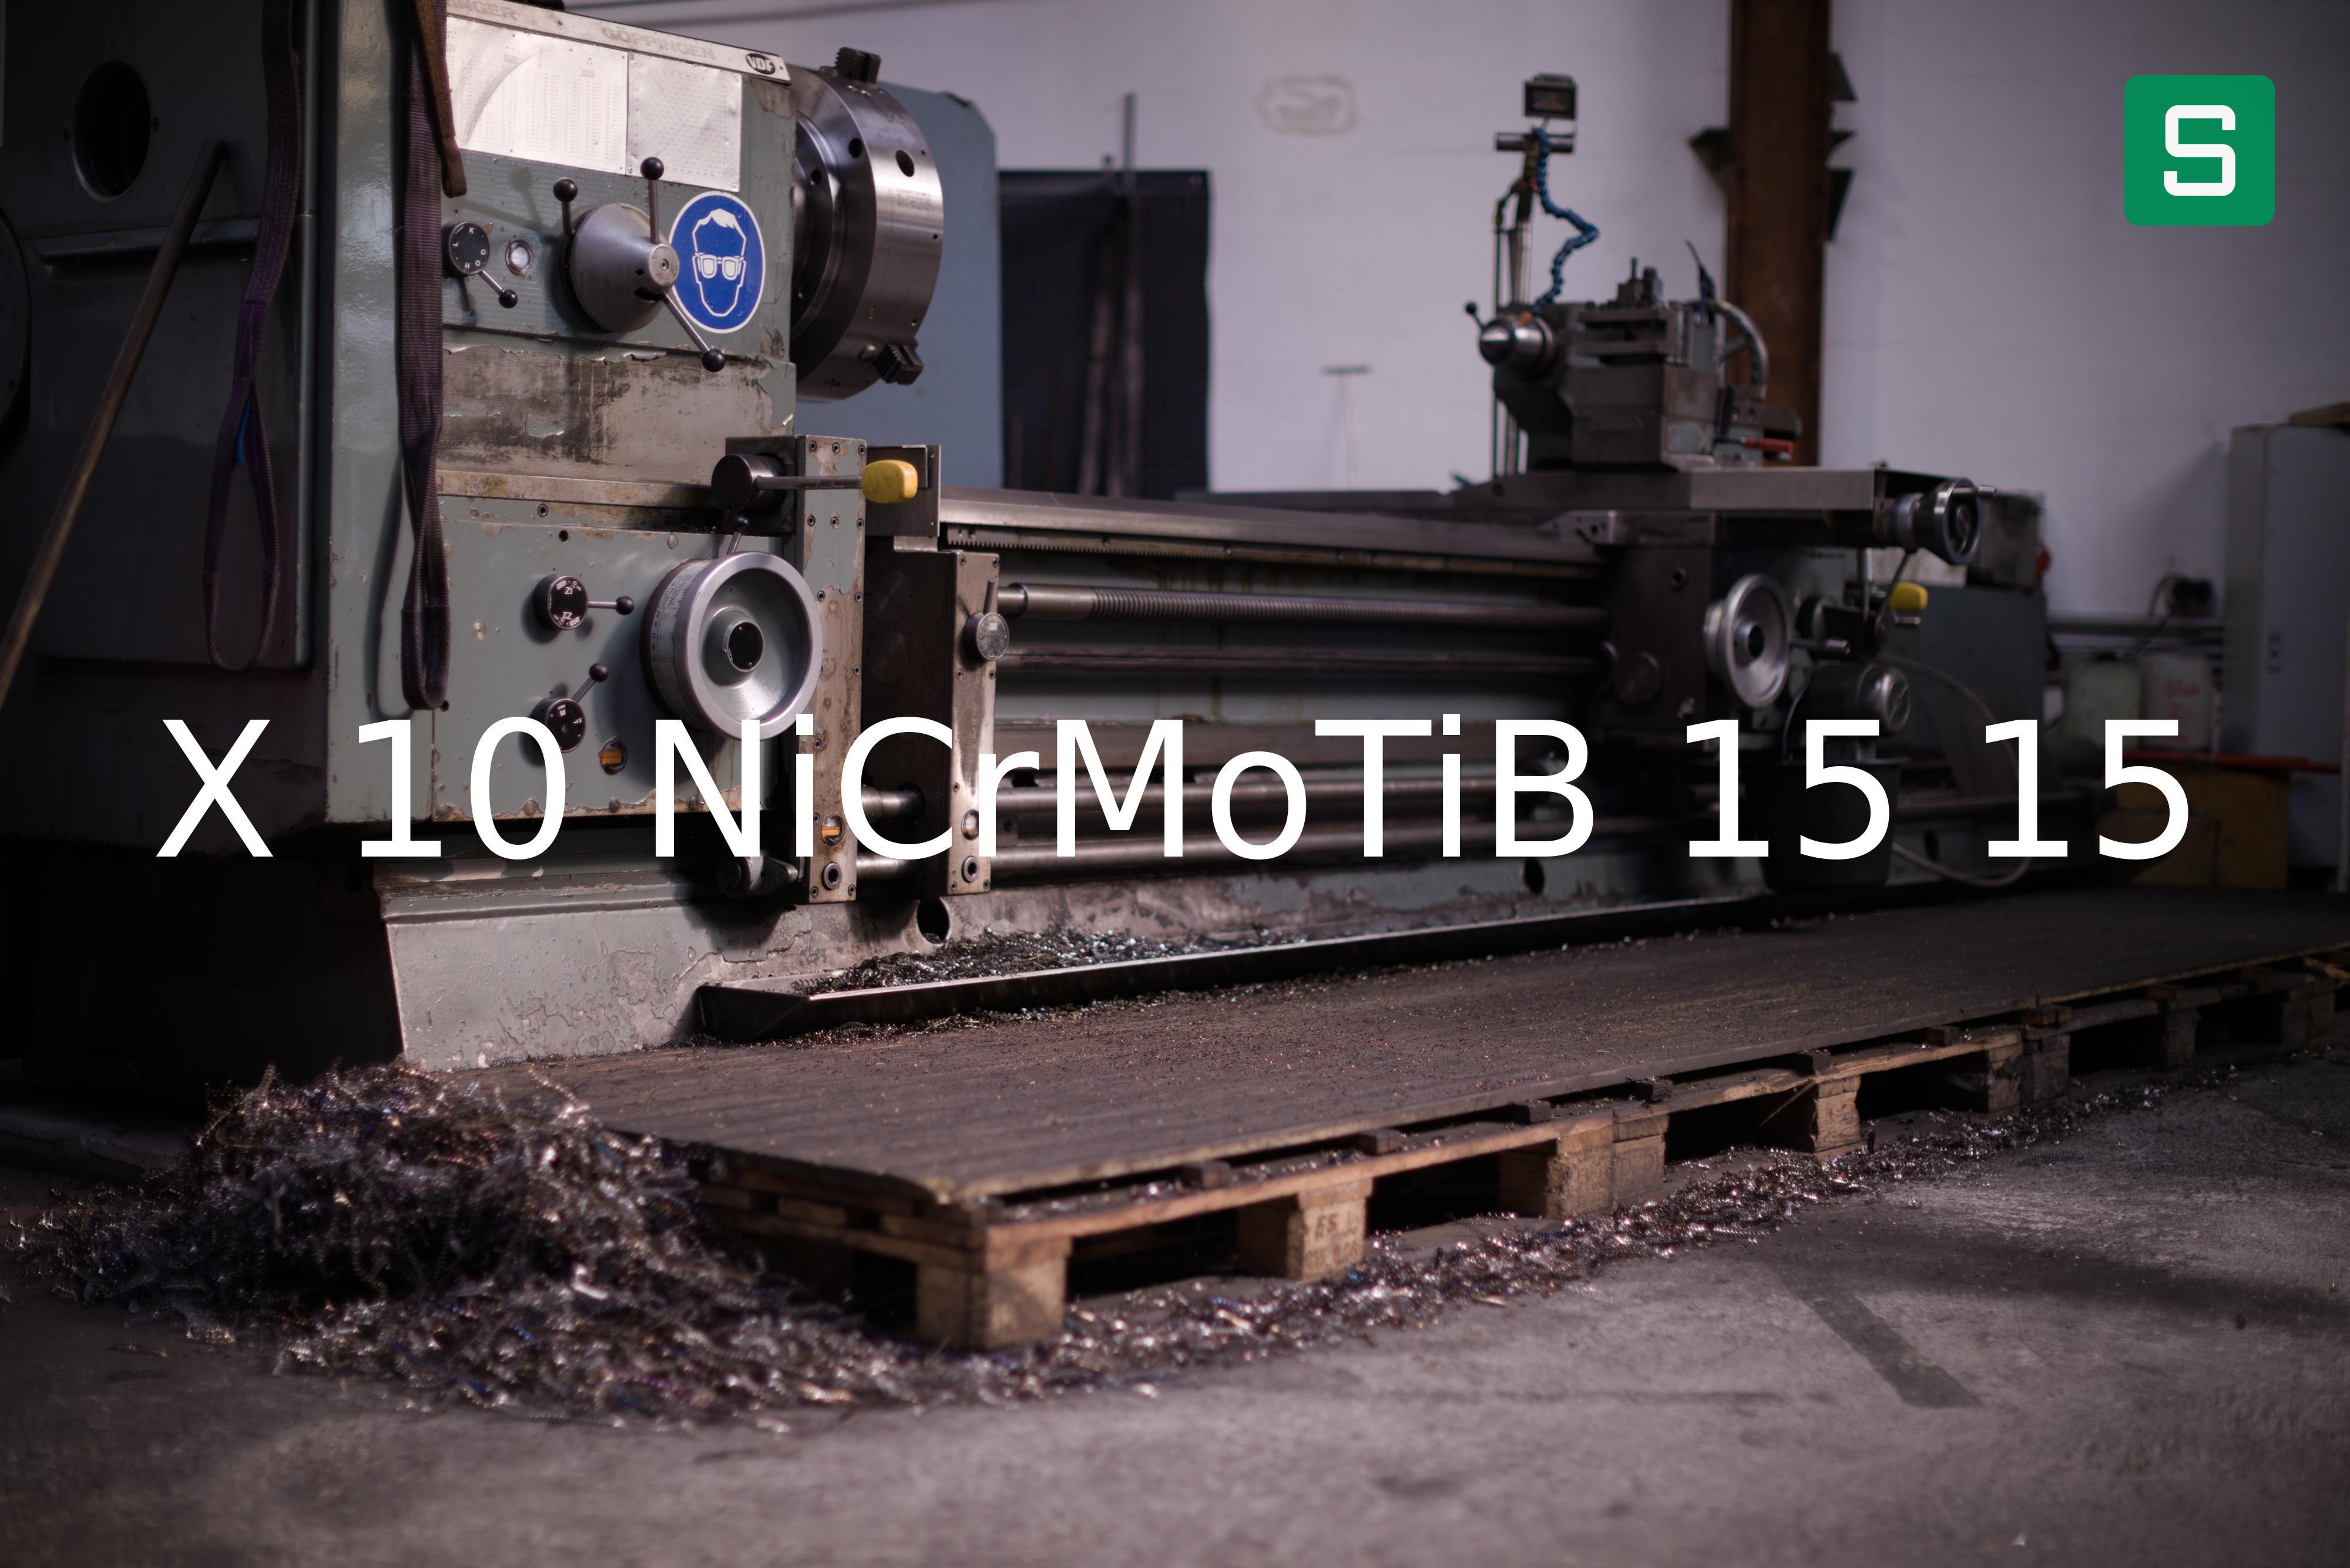 Steel Material: X 10 NiCrMoTiB 15 15